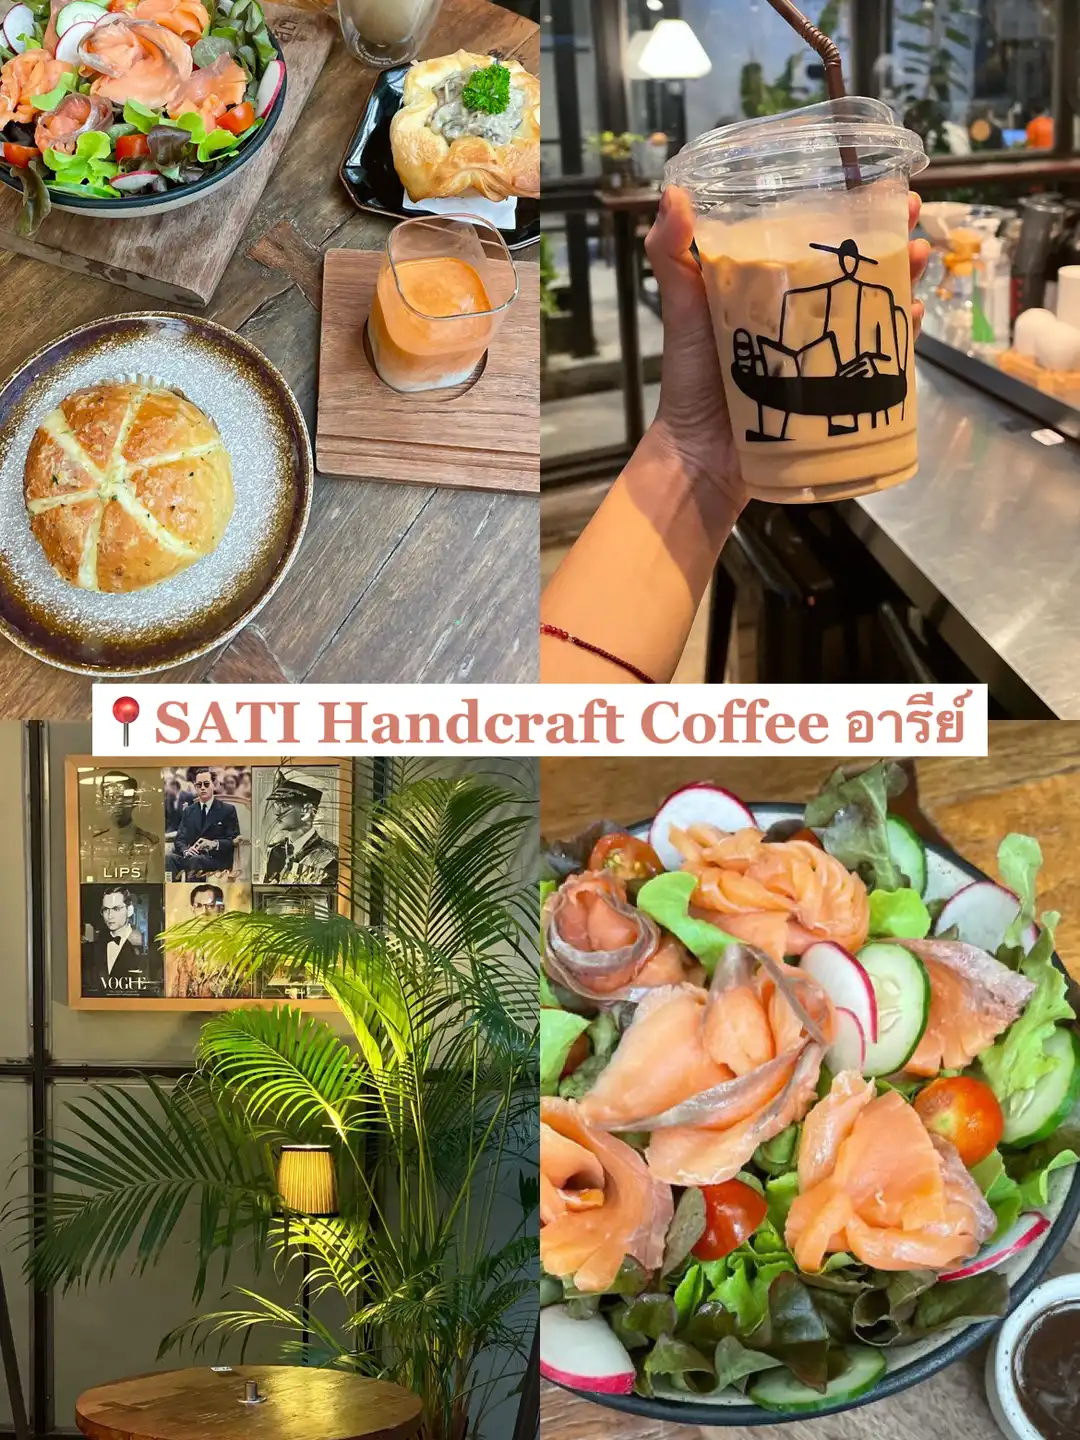 sati handcraft coffee_